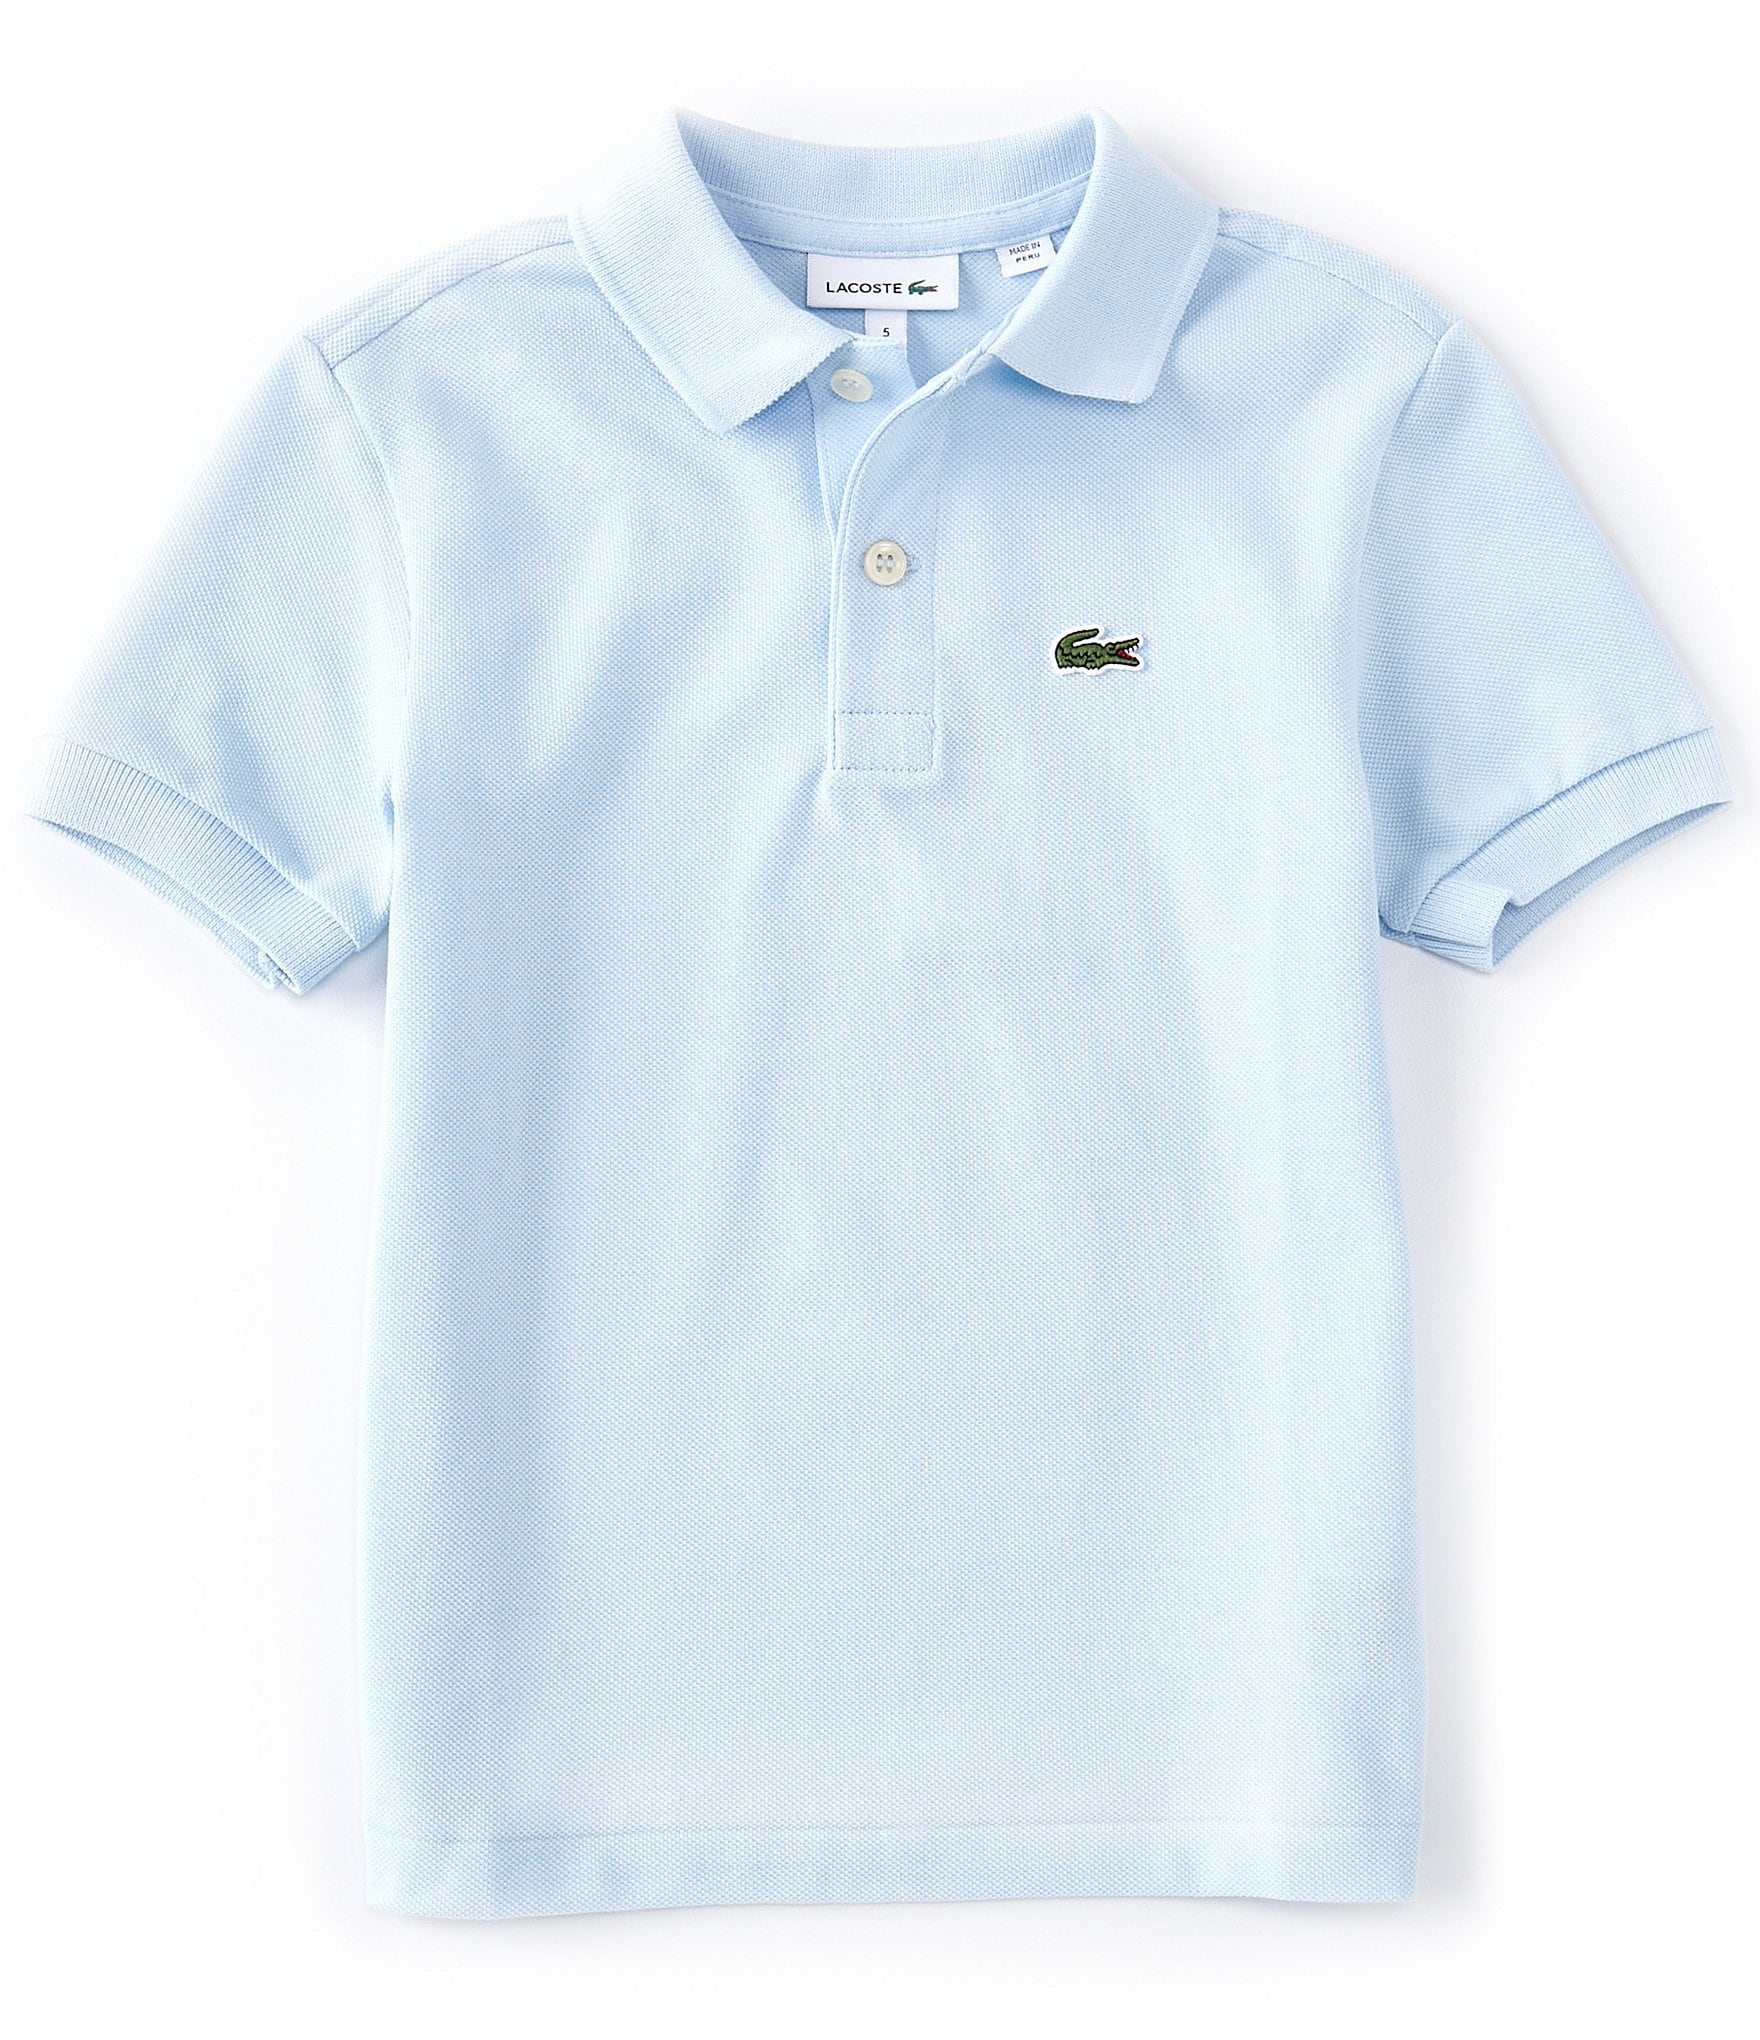 Lacoste Little Boys 2T-6T Pique Polo Short Sleeve Shirt |